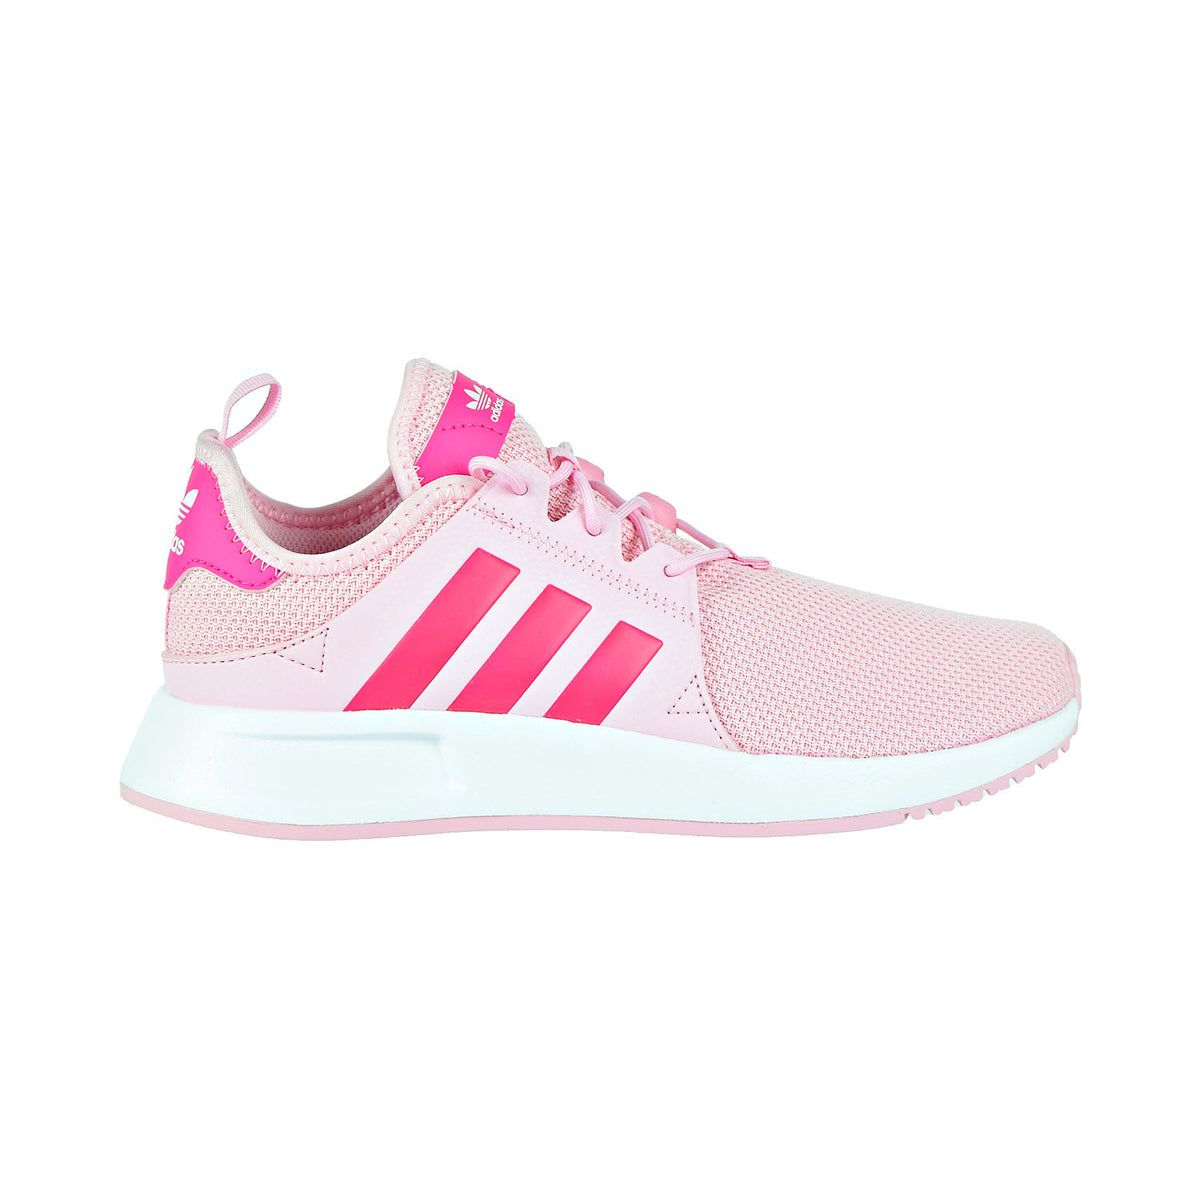 Adidas X_PLR Shoes True Pink/Shock Pink